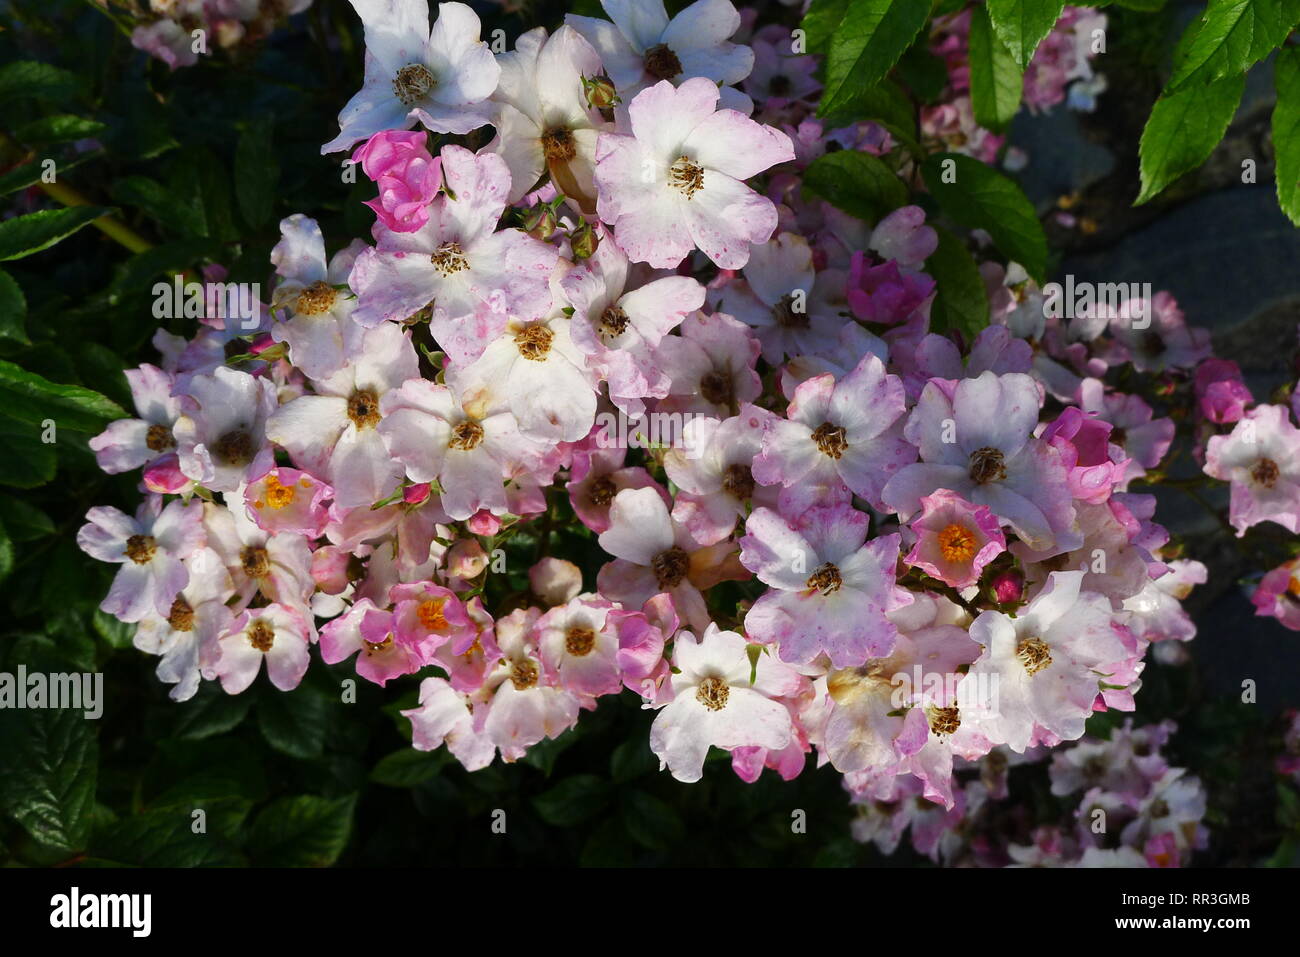 Rosa Ballerina Polyantha, rose ballerina, hybrid musk rose, agm, pink white yellow center centre shrub plant, bedding, nature, spring concept, bright Stock Photo